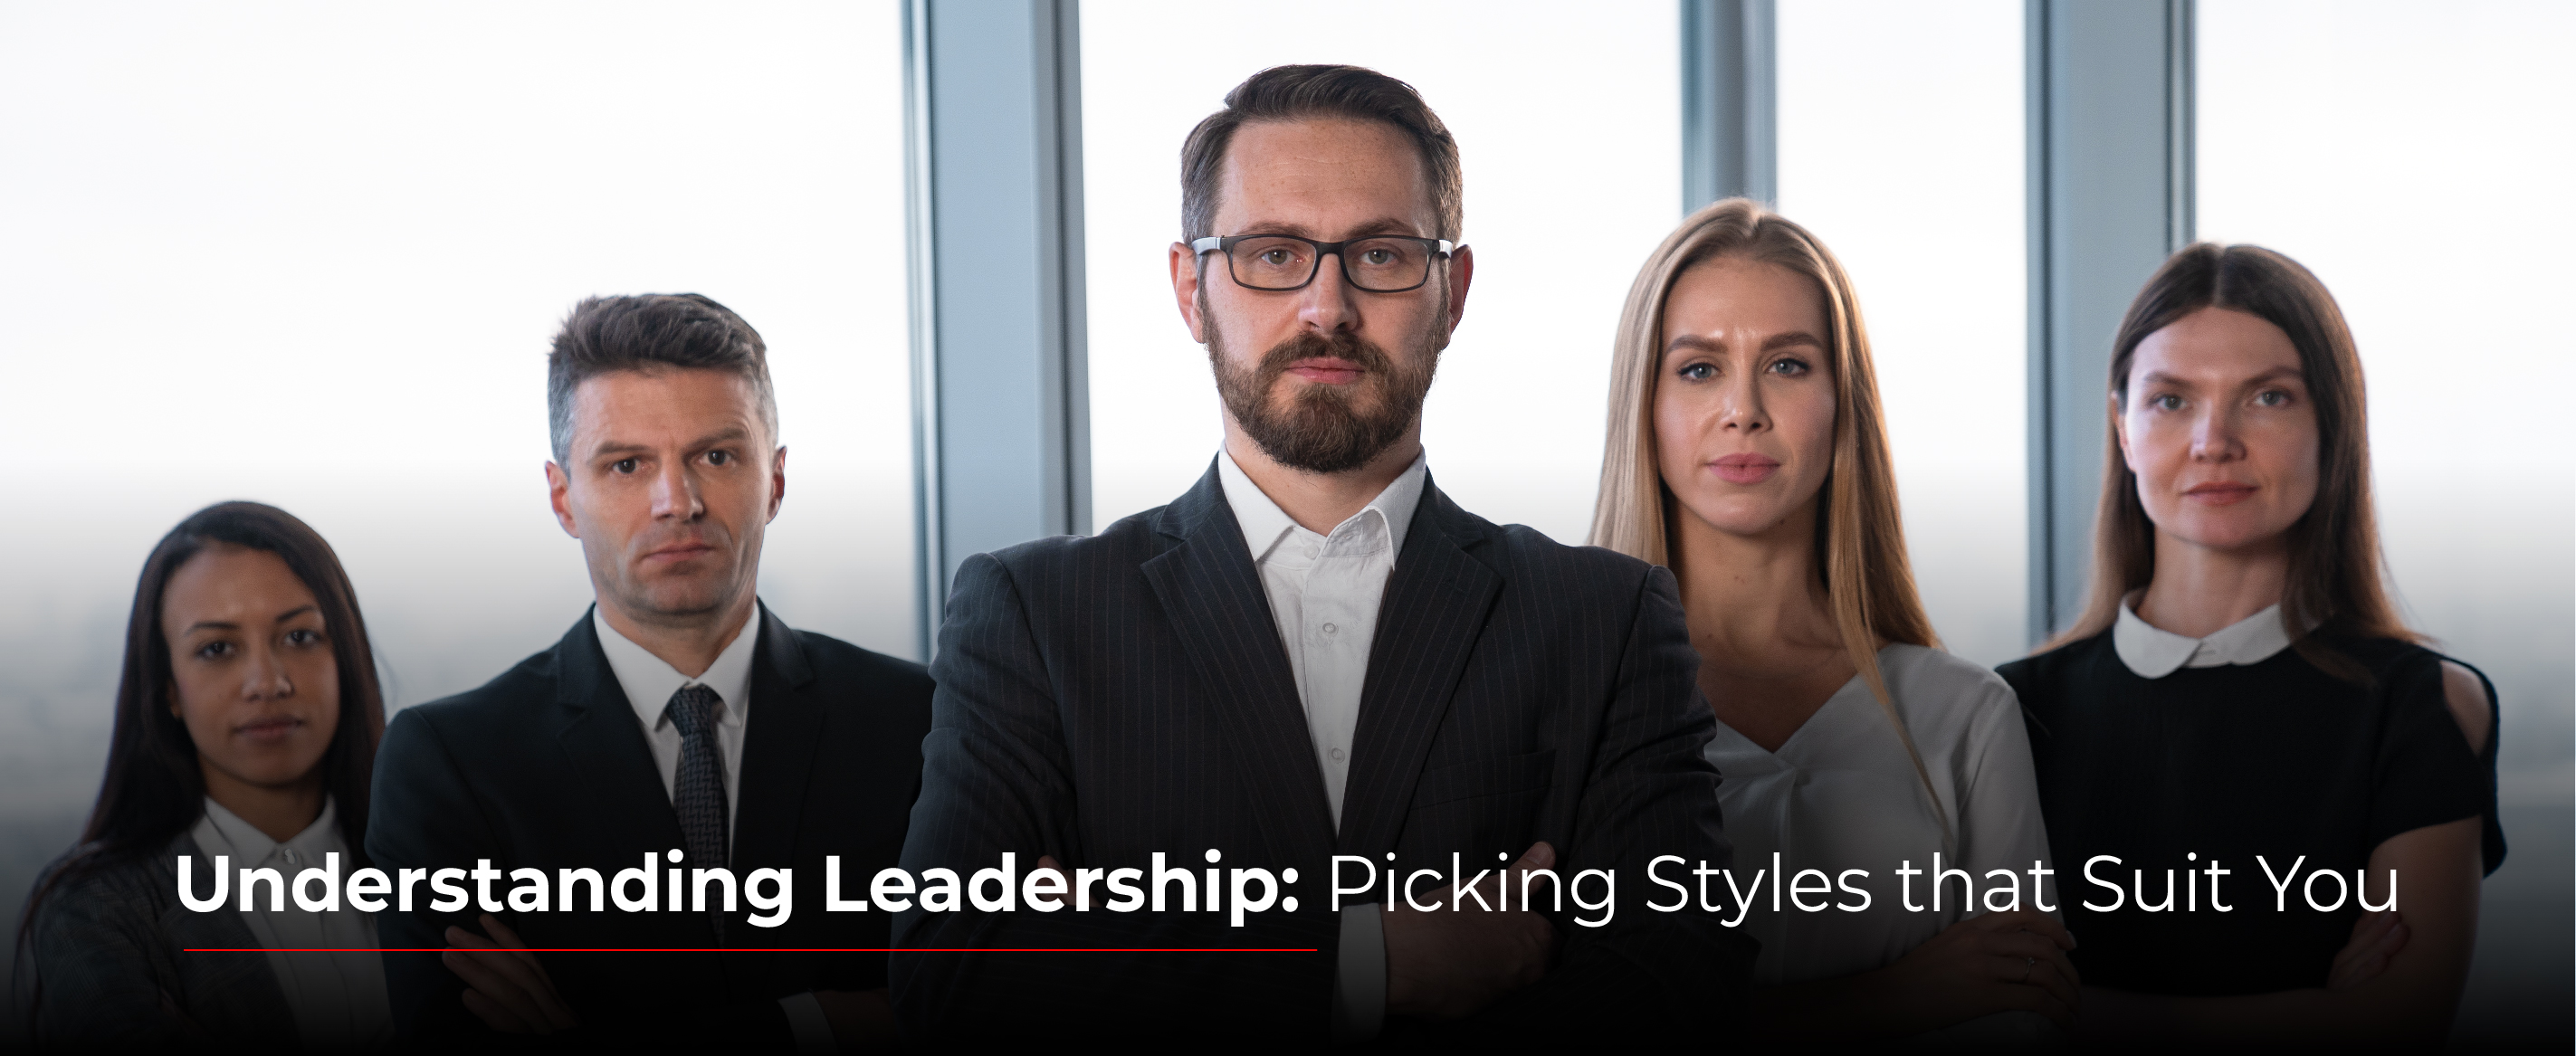 Understanding Leadership: Picking Styles that Suit You